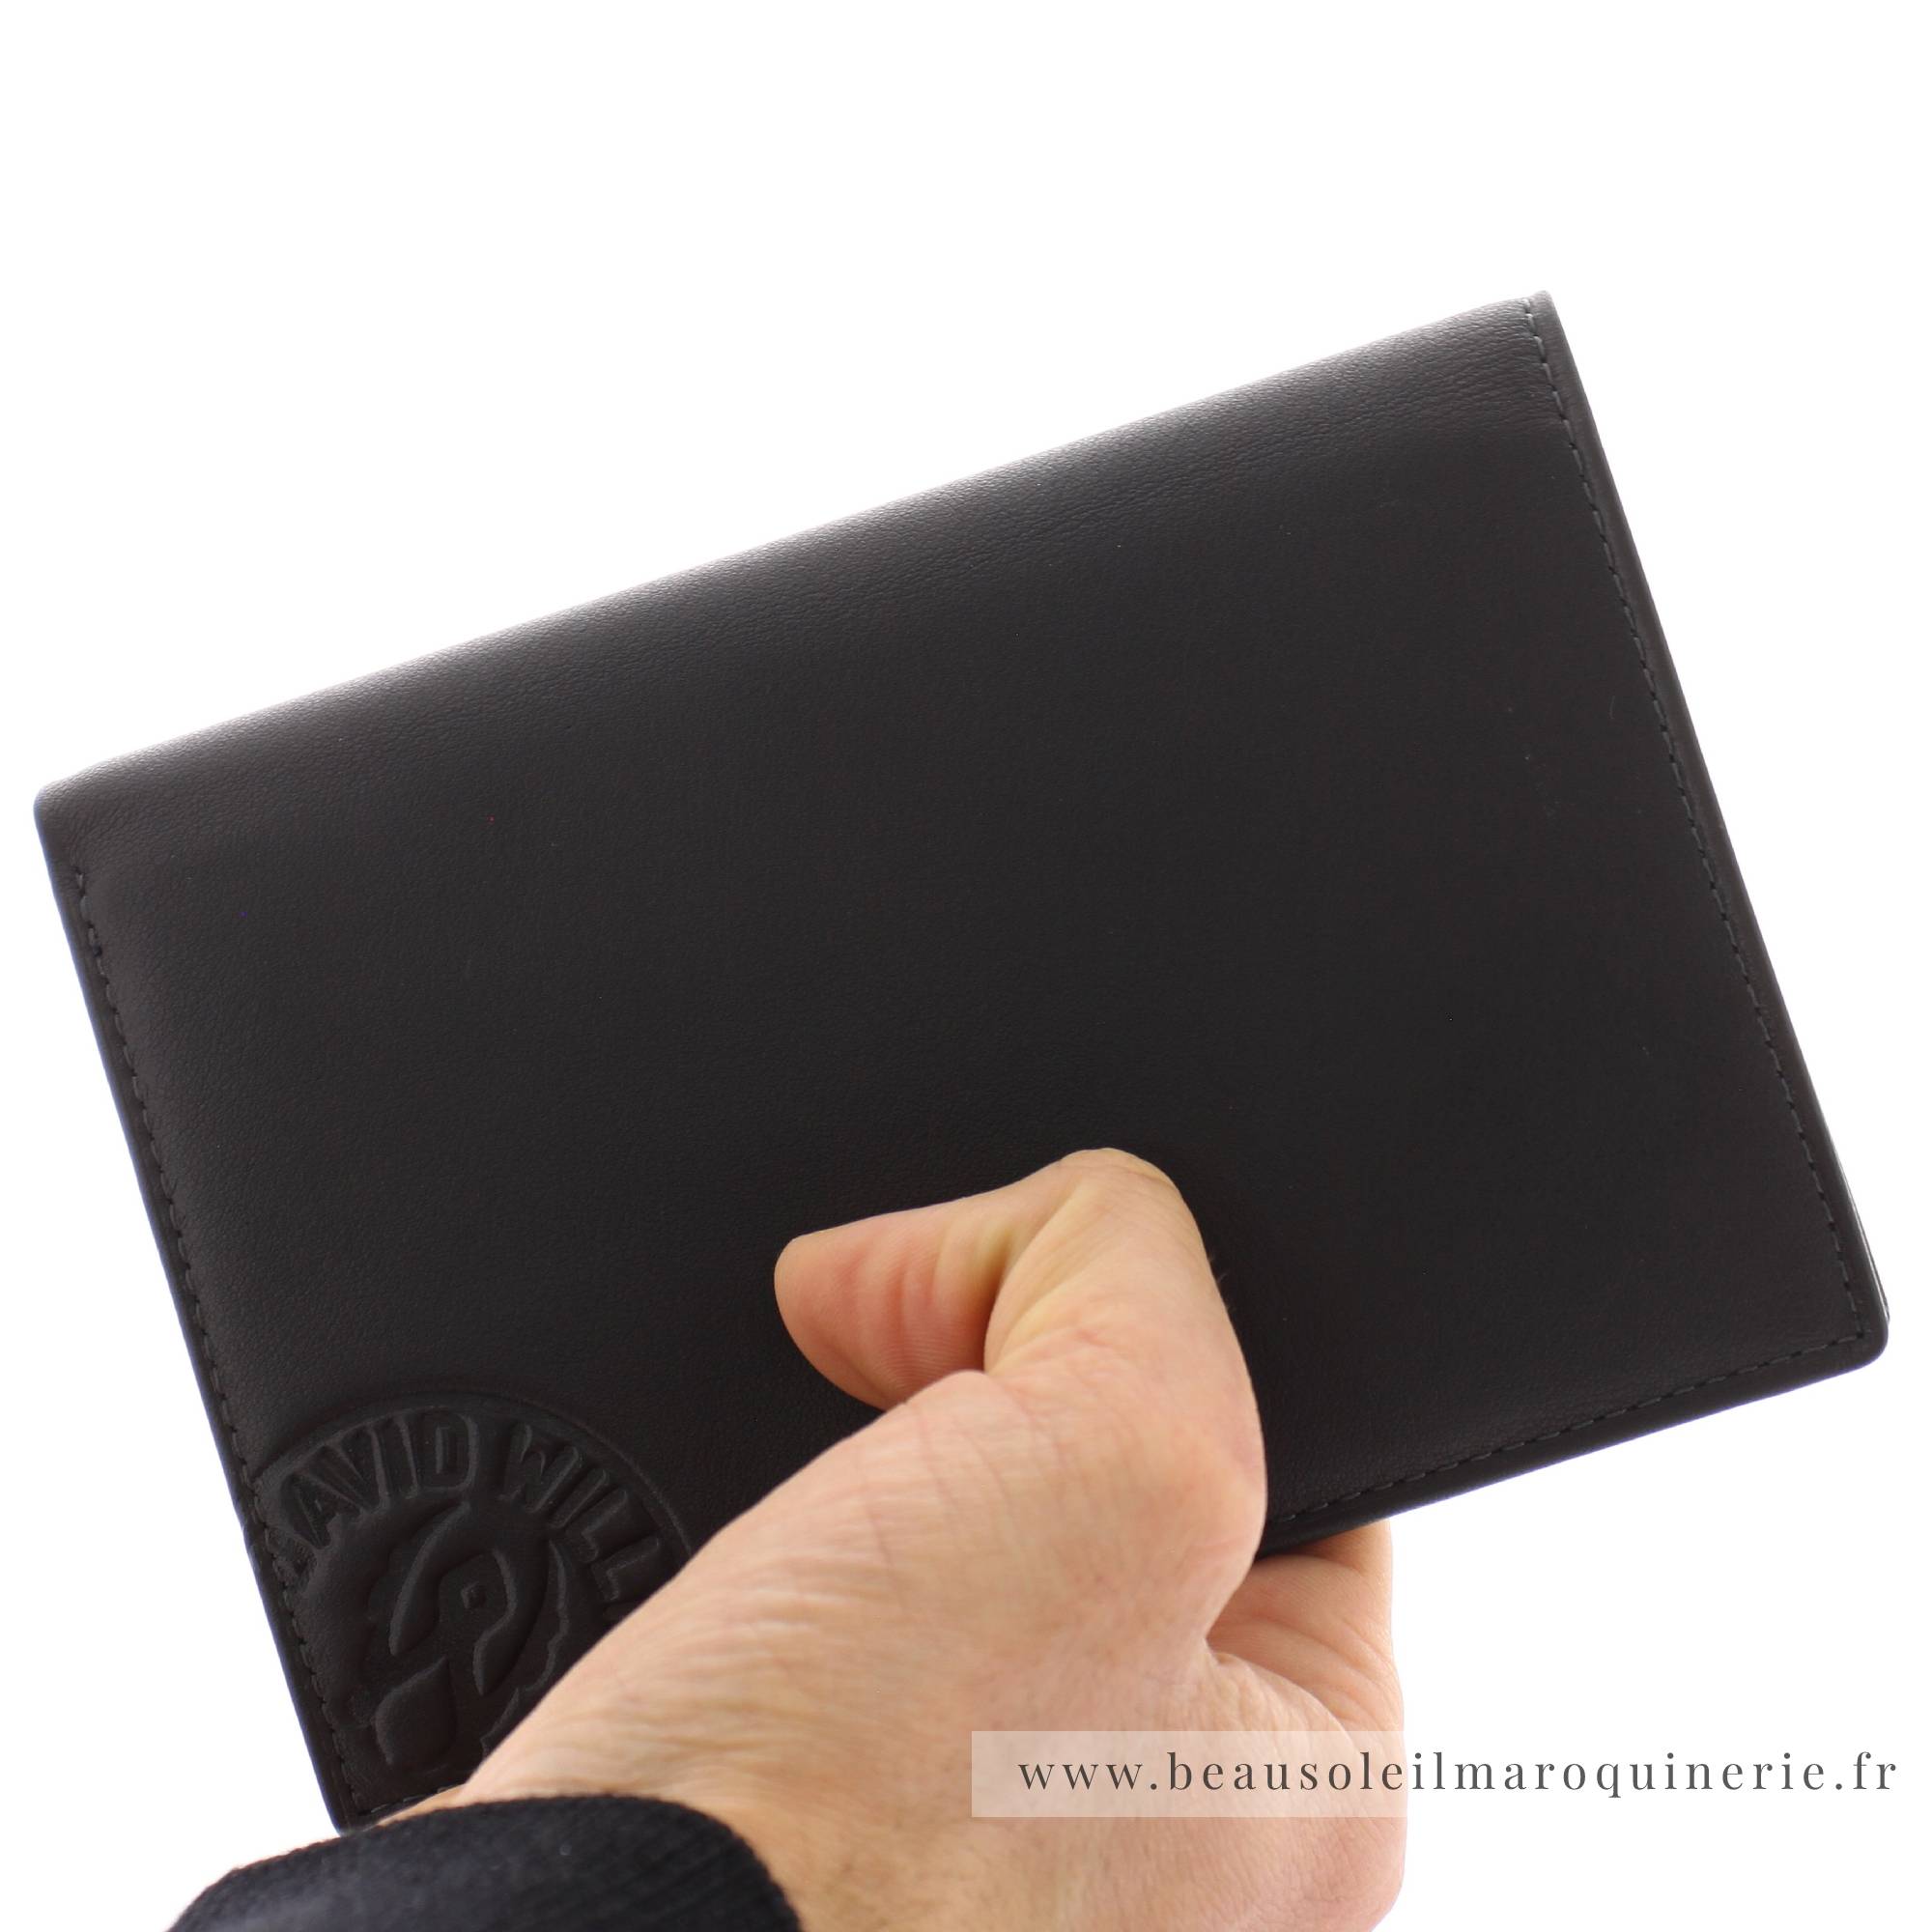 Portefeuille grand format en cuir Annan David William D5308NR noir porté main